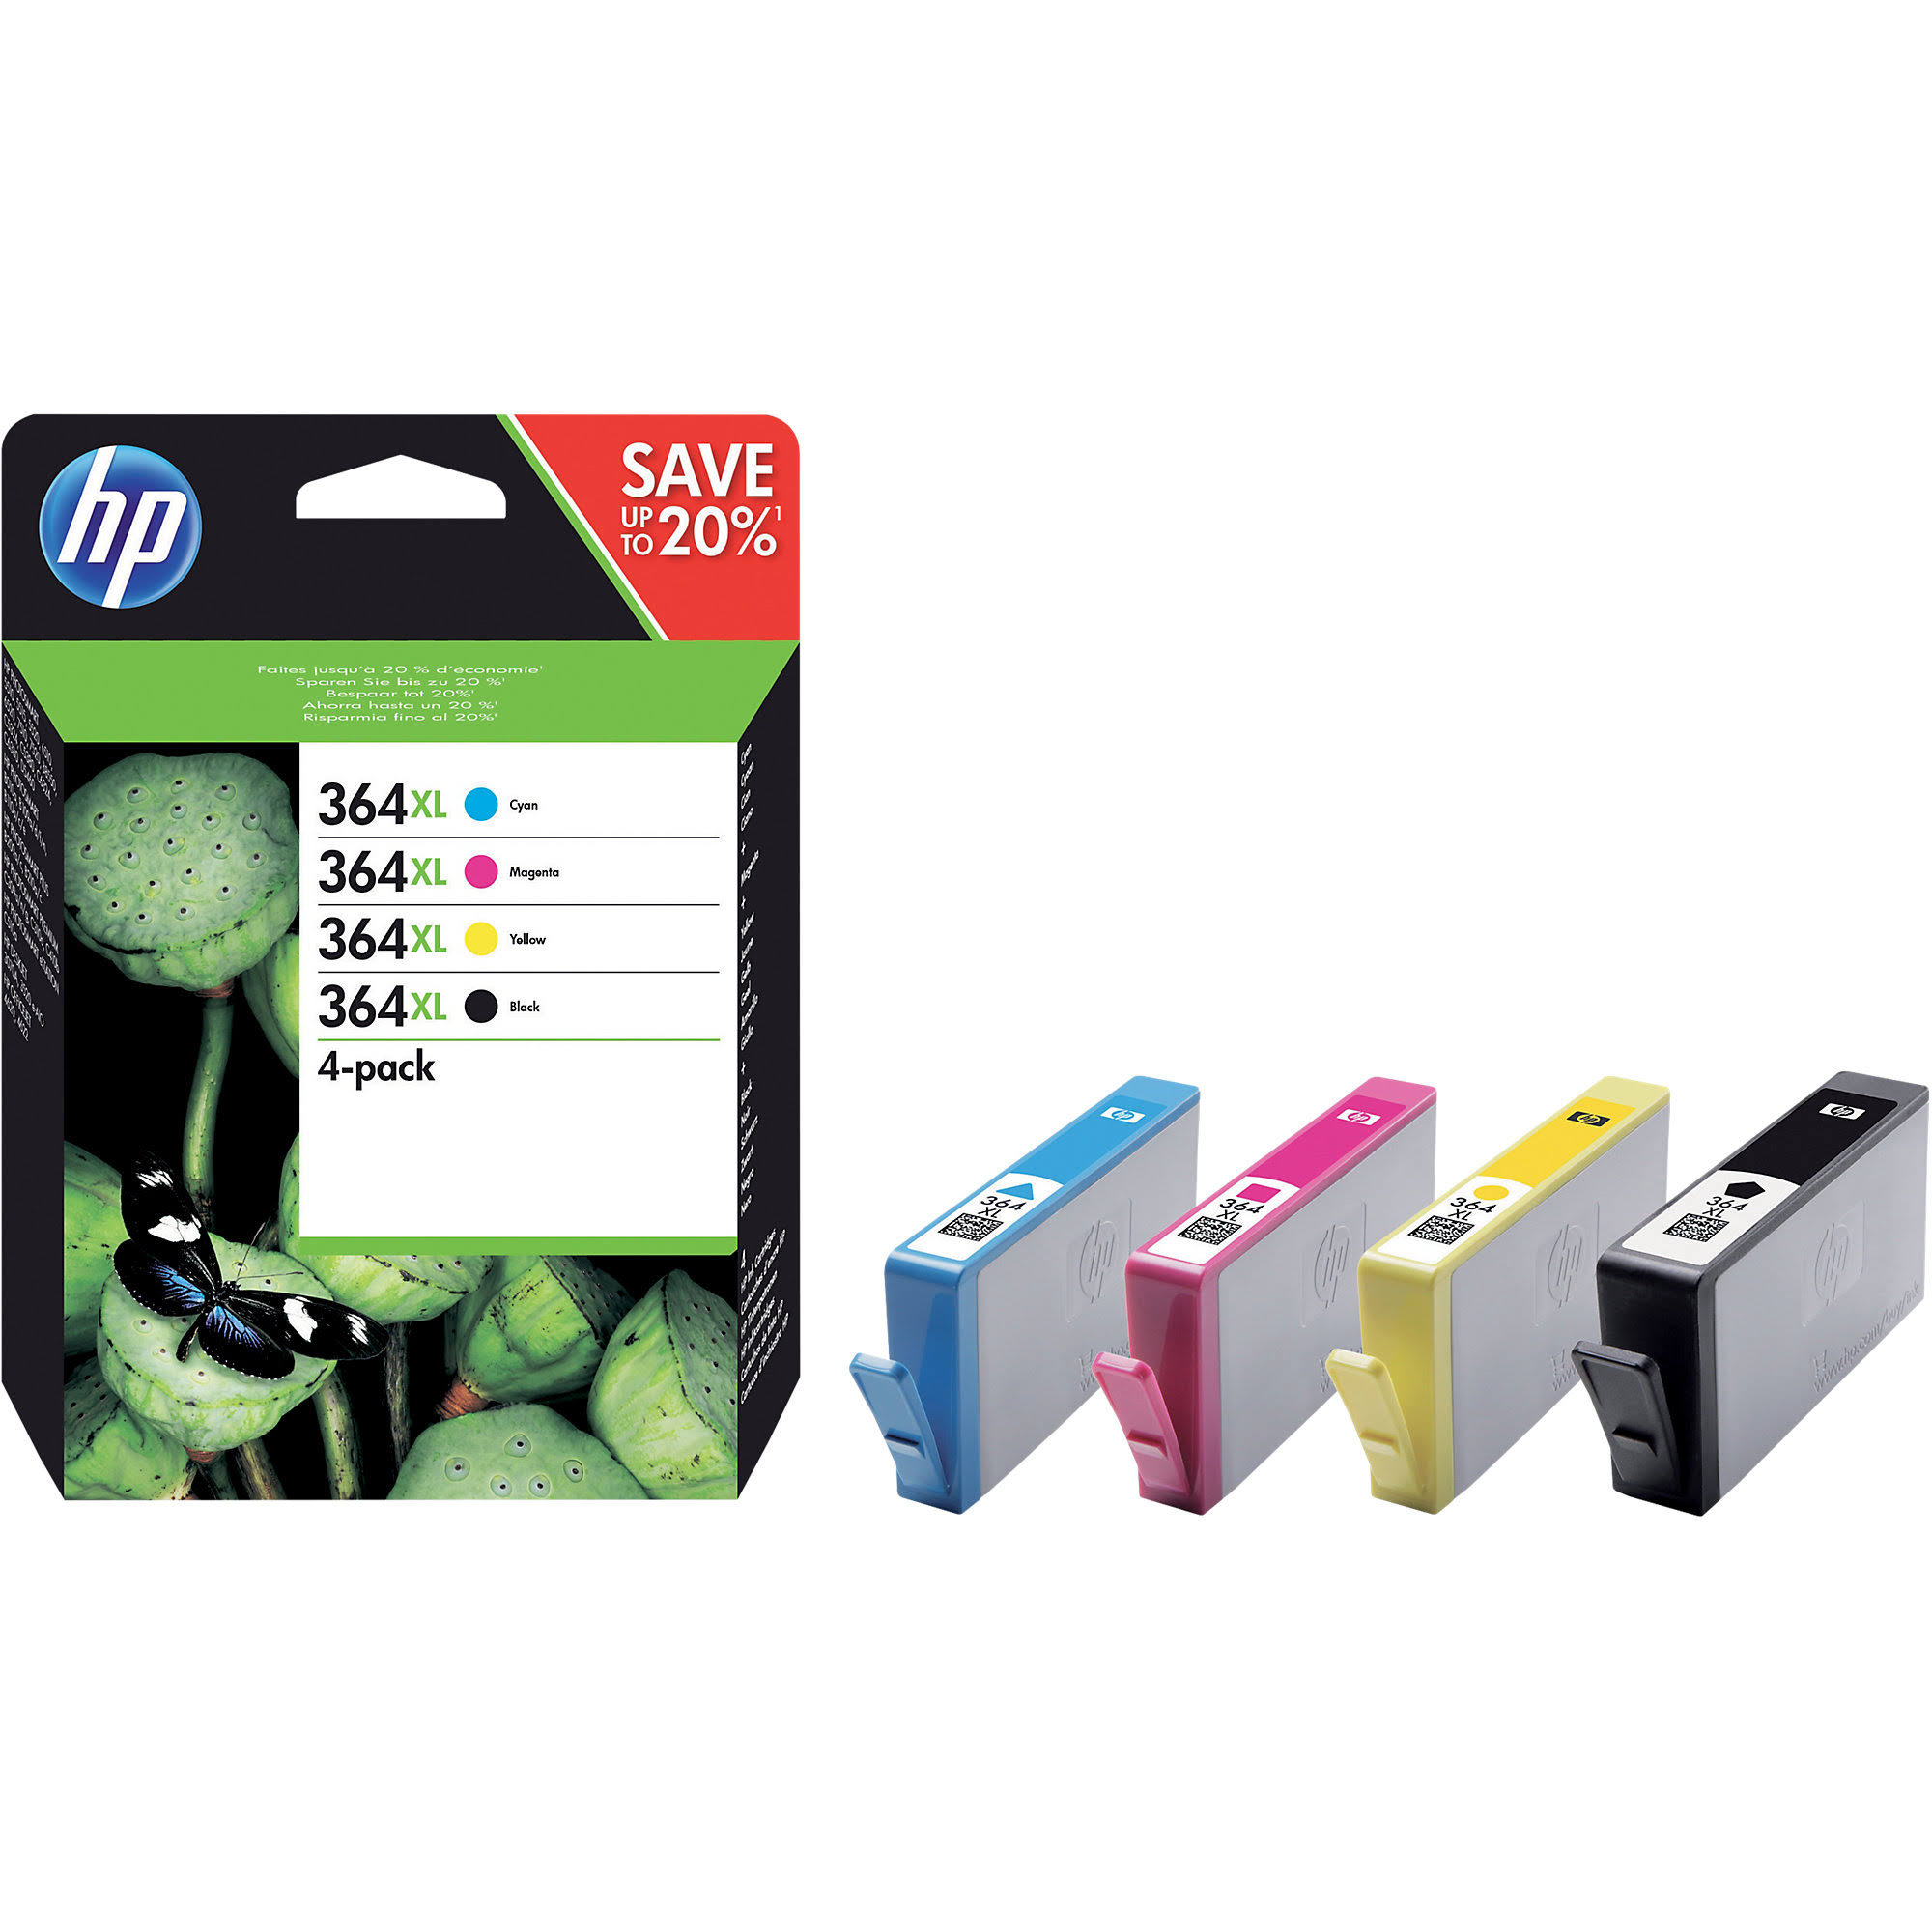 HP 364XL Ink Cartridge - Black/Cyan/Magenta/Yellow